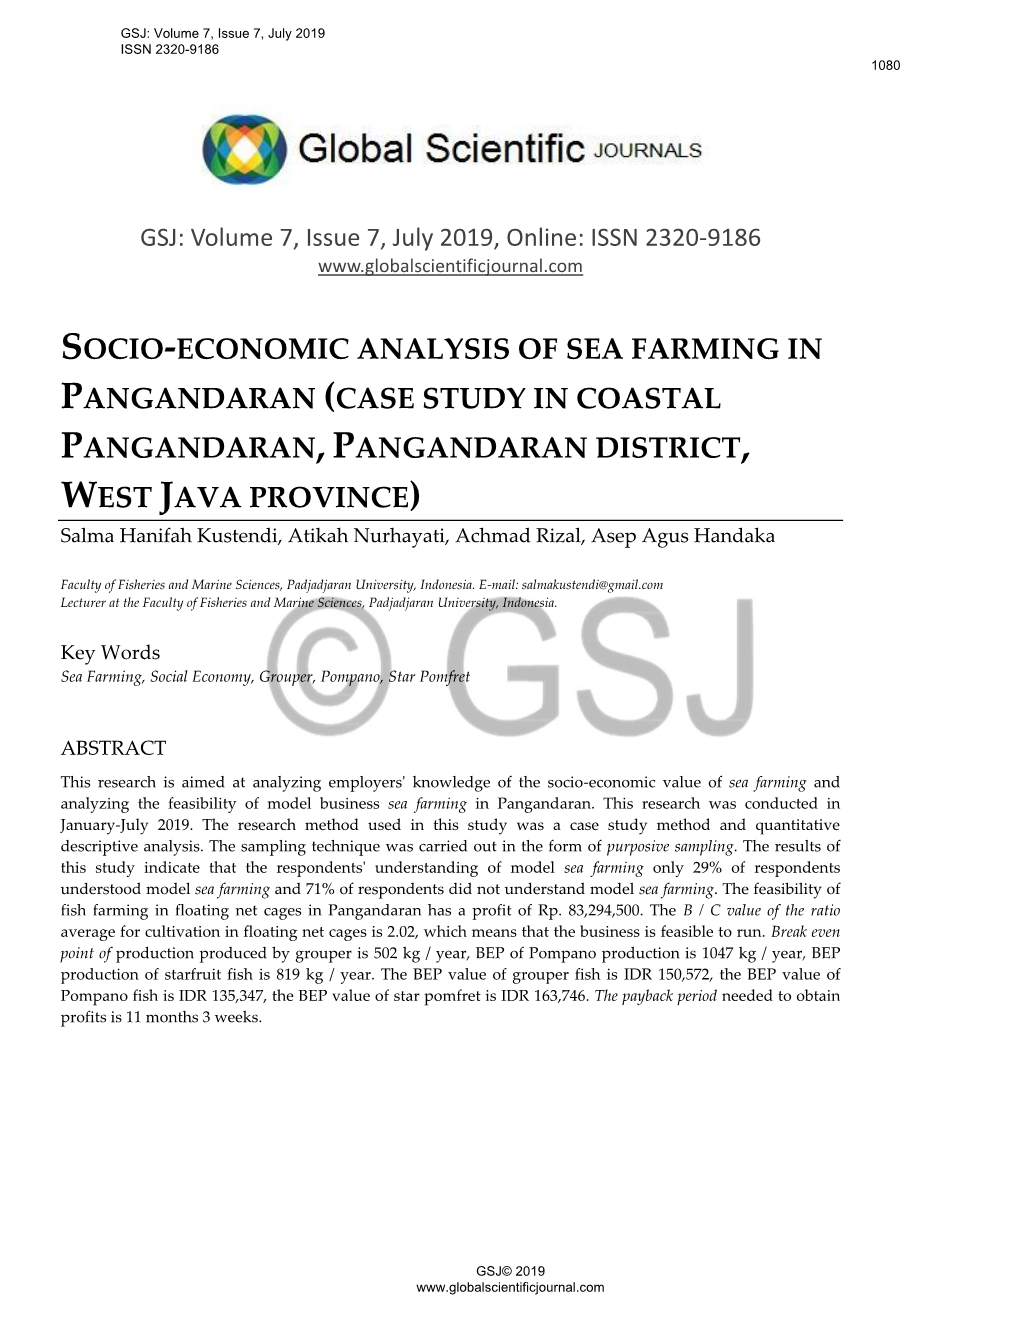 Socio-Economic Analysis of Sea